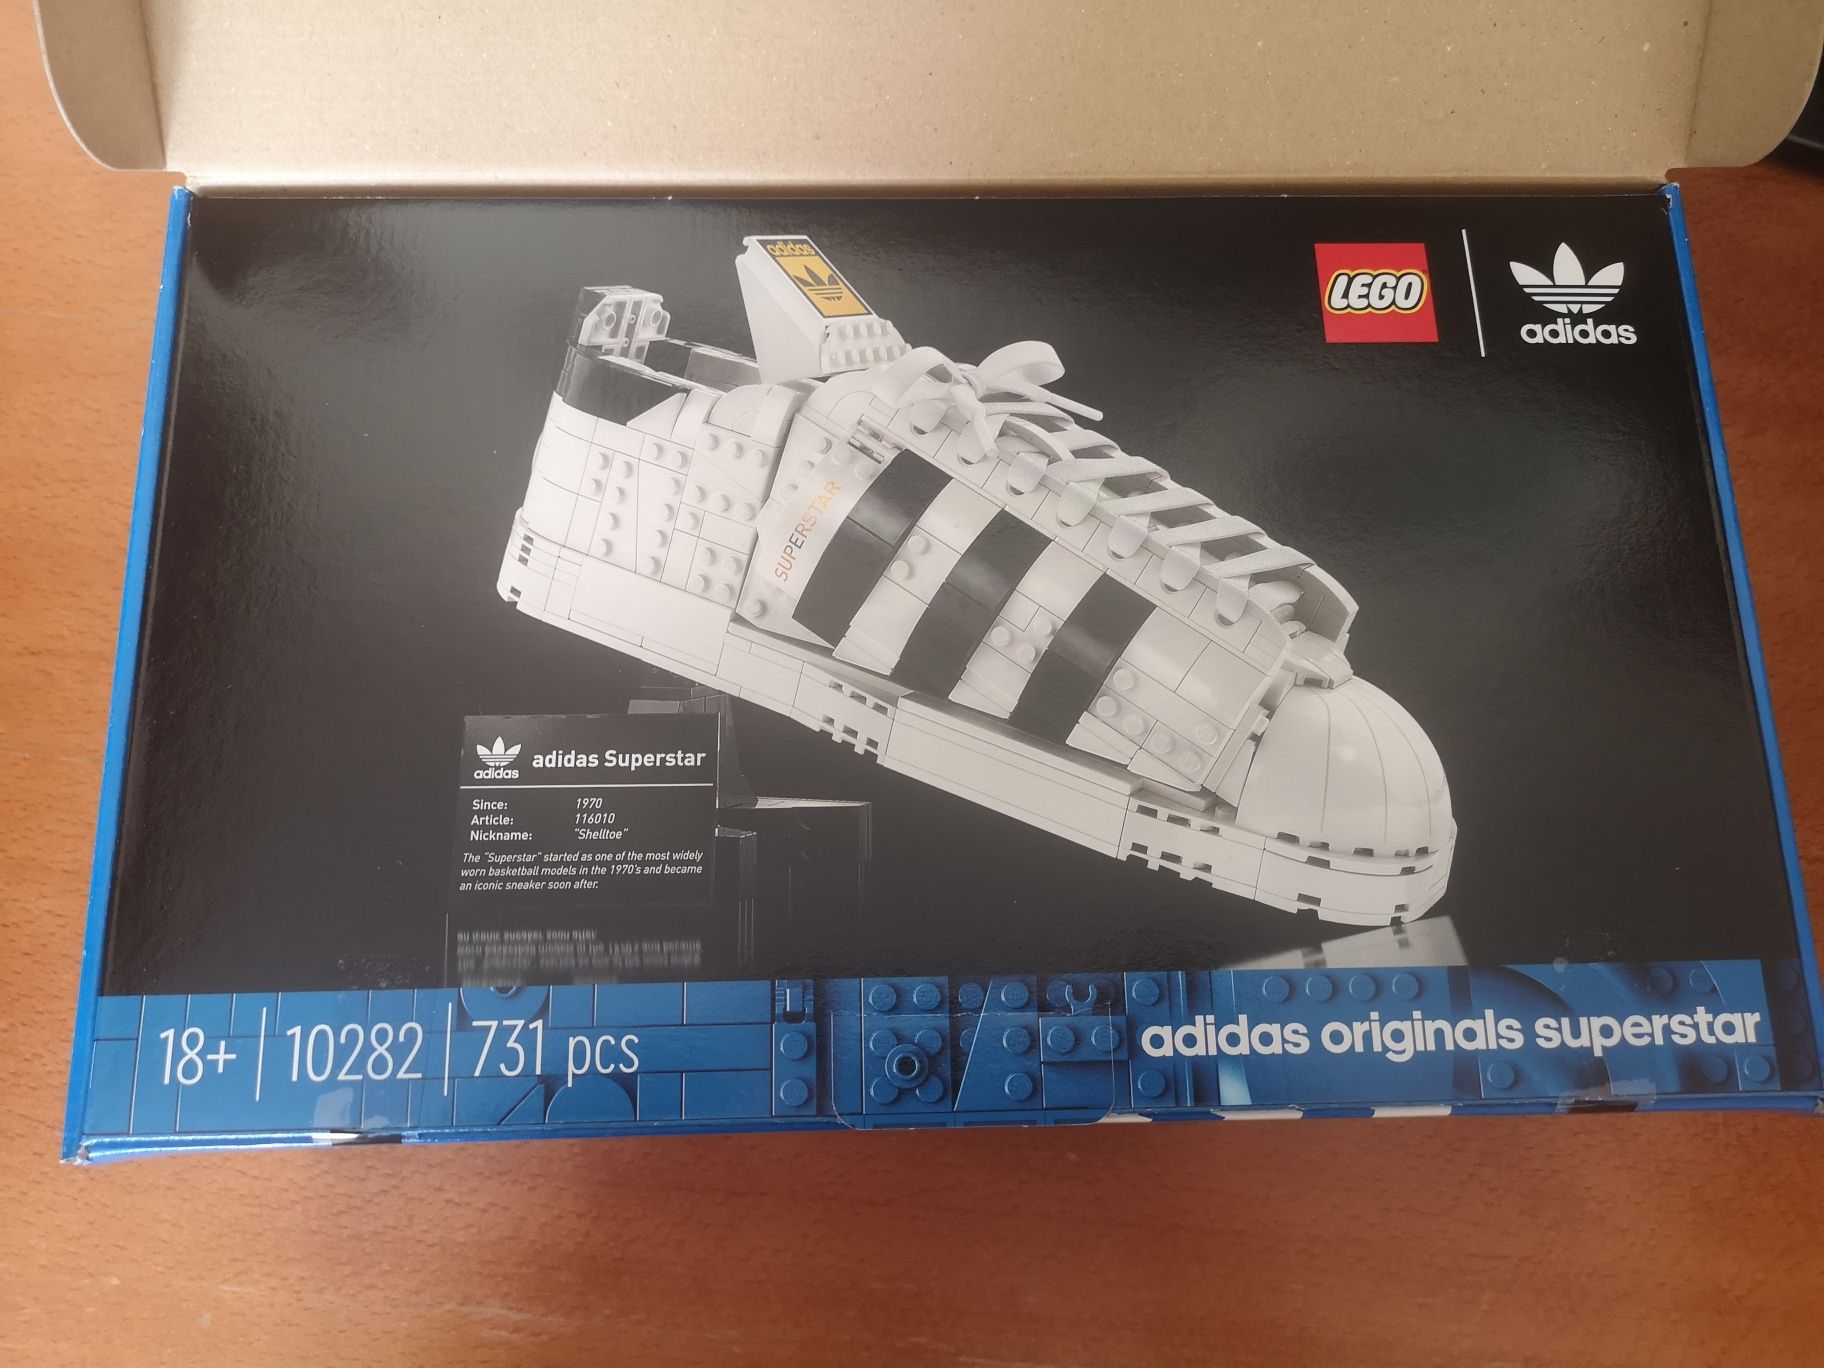 Lego 10282 adidas originals superstar